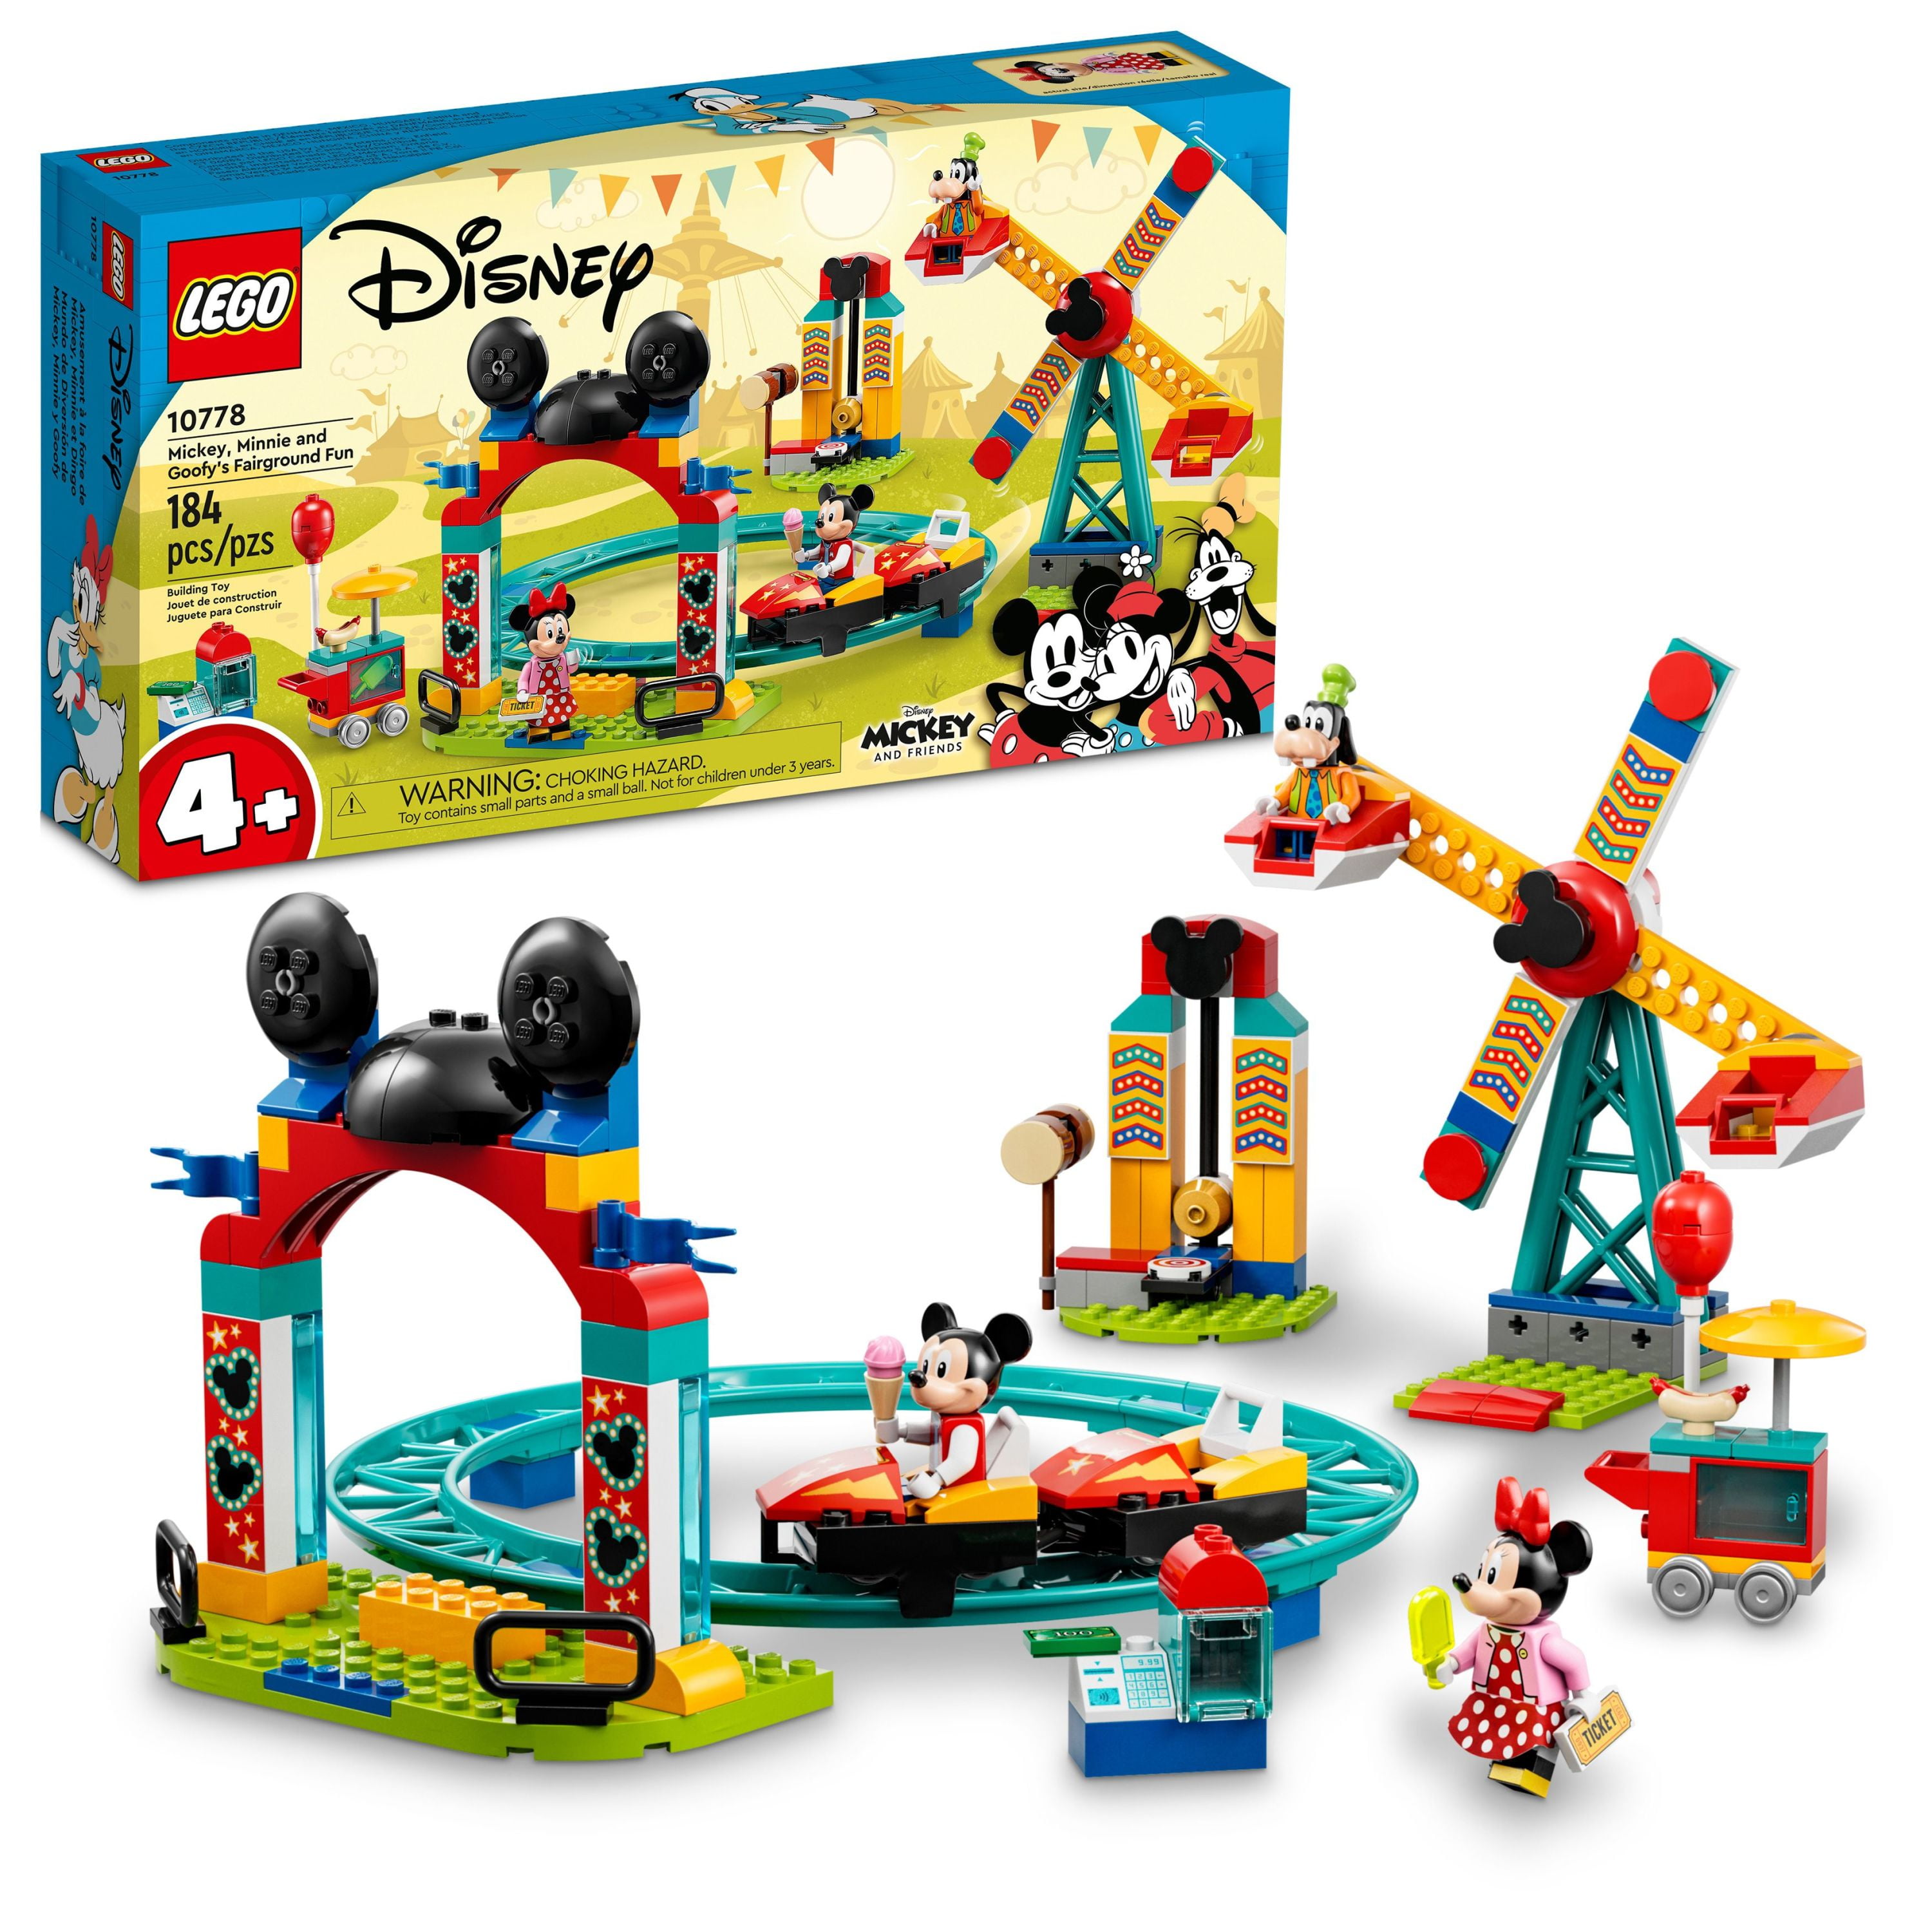 ydre Saucer Canberra LEGO Disney Mickey and Friends – Mickey, Minnie and Goofy's Fairground Fun  Toy Set Set 10778 - Walmart.com